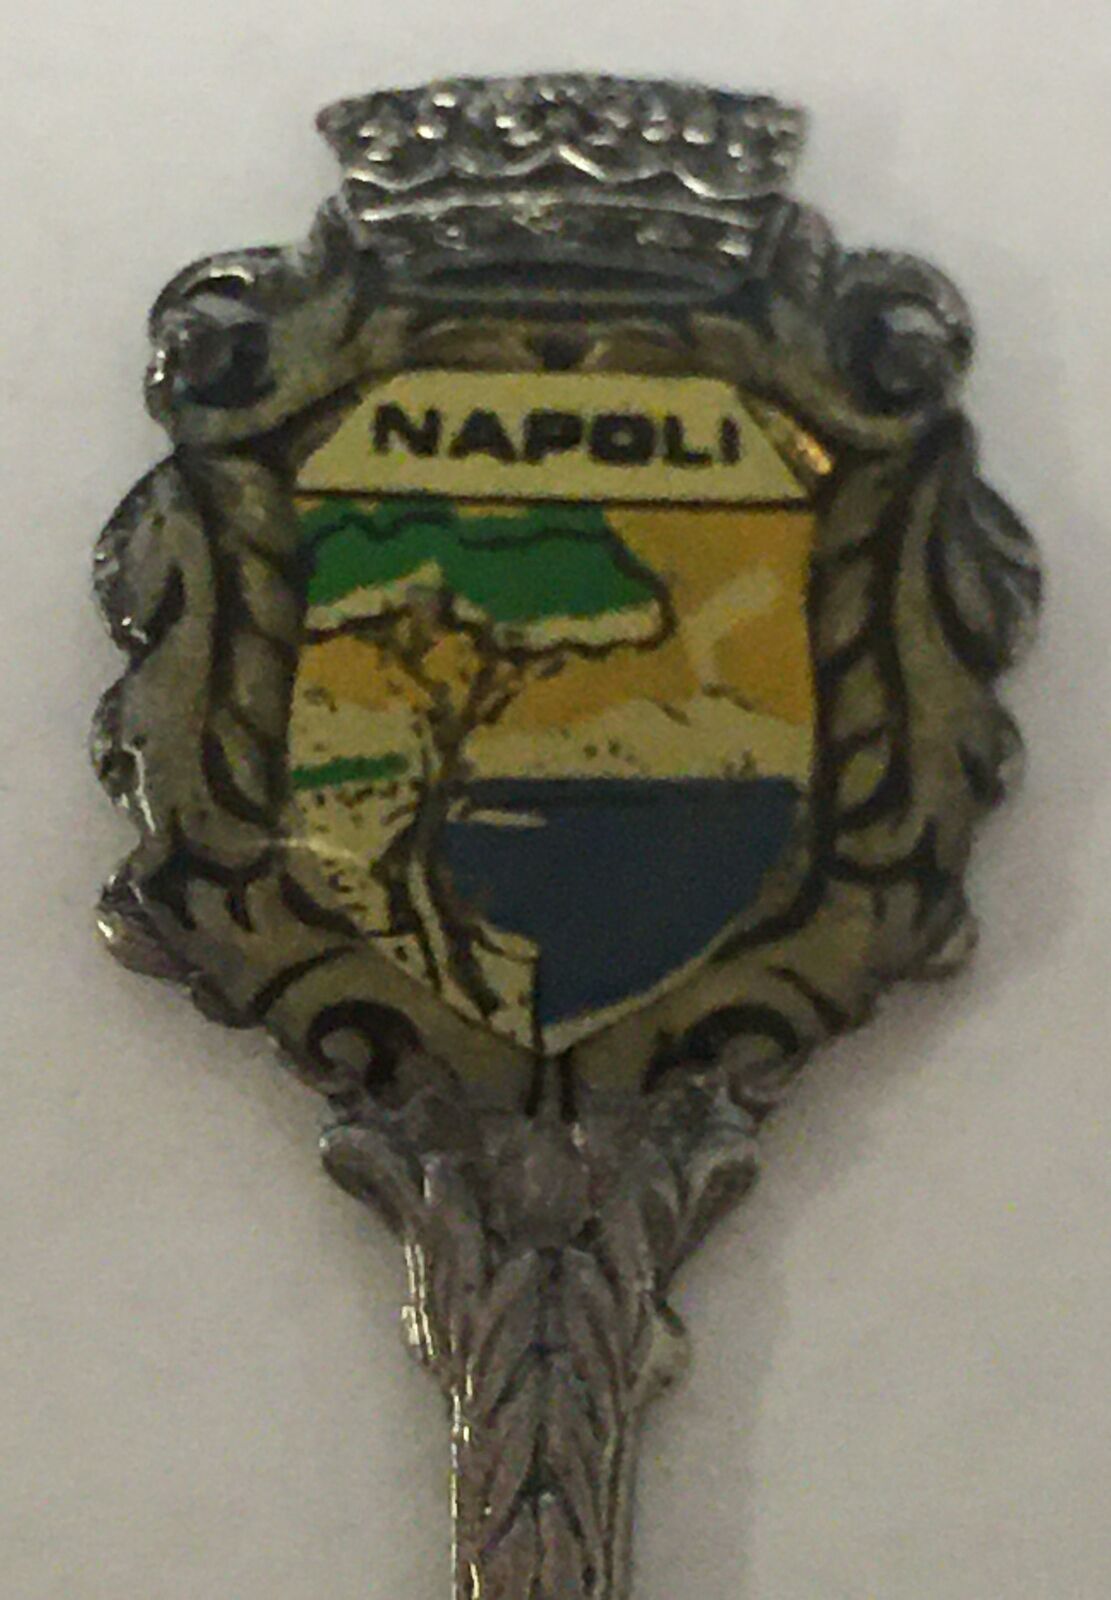 Napoli Naples Italy Vintage Souvenir Spoon Collectible